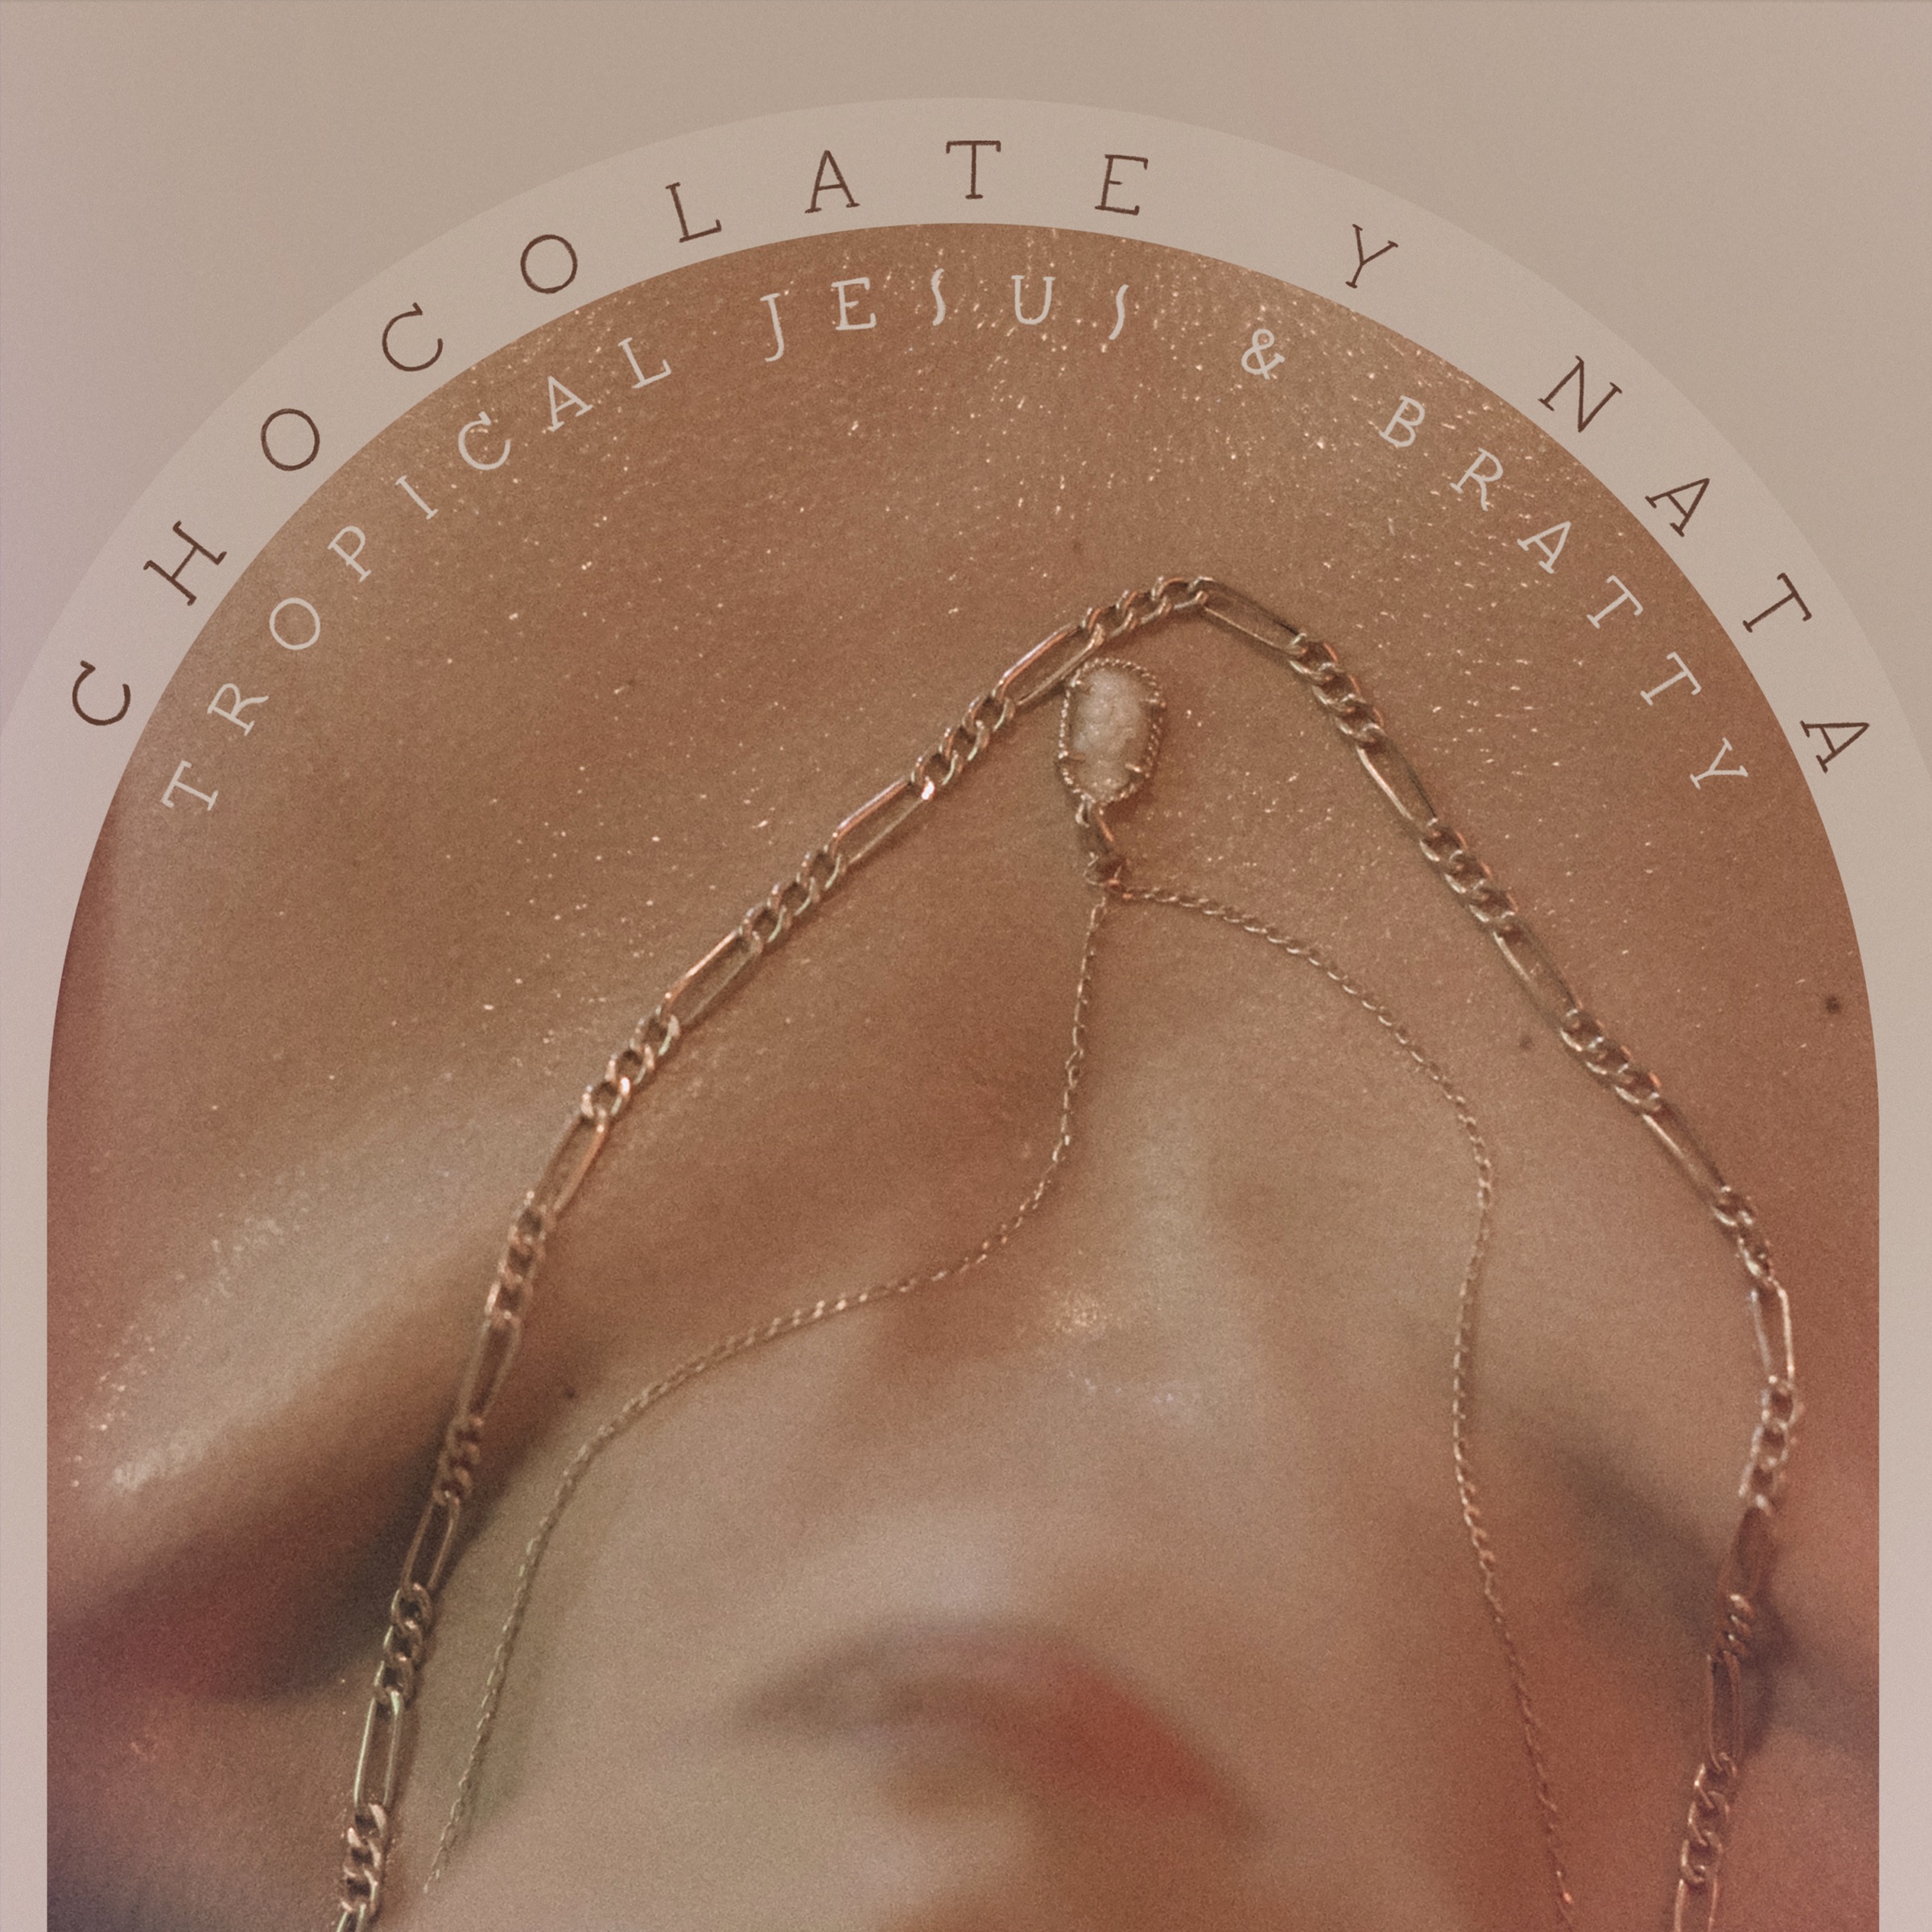 Carlos Sadness & Bratty Chocolate y nata cover artwork